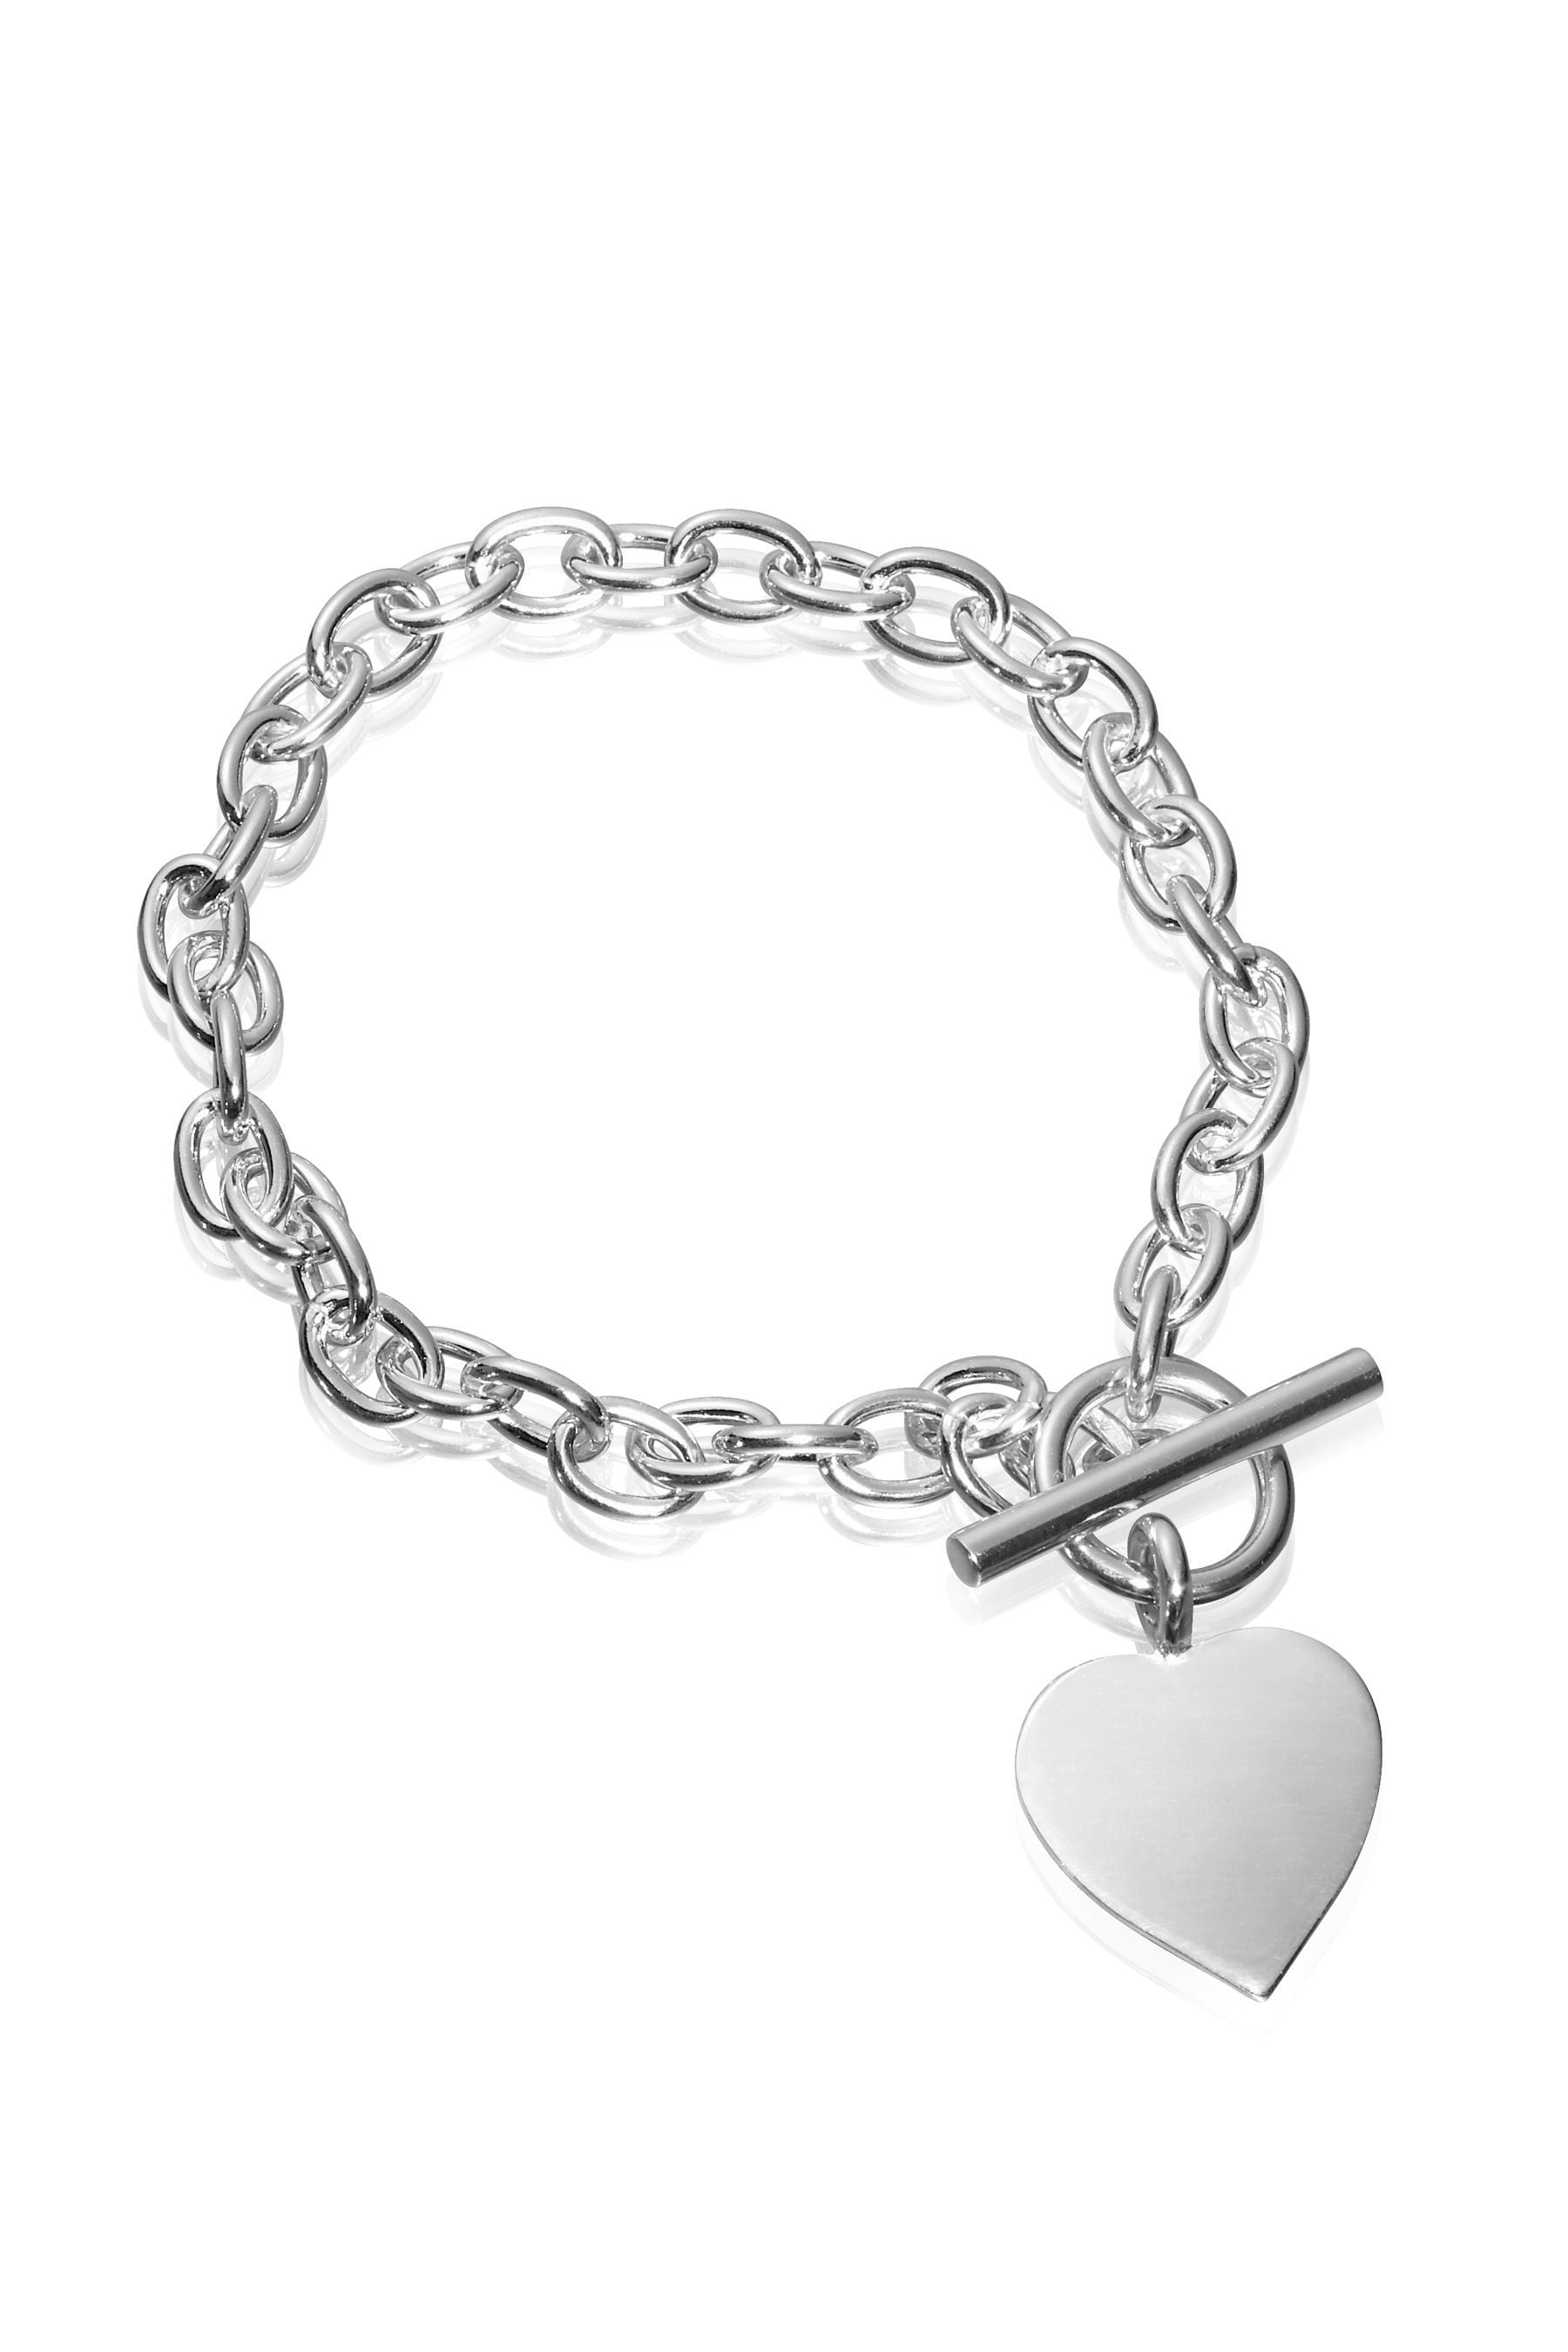 Buy Beaverbrooks Belcher Heart Bracelet from the Next UK online shop